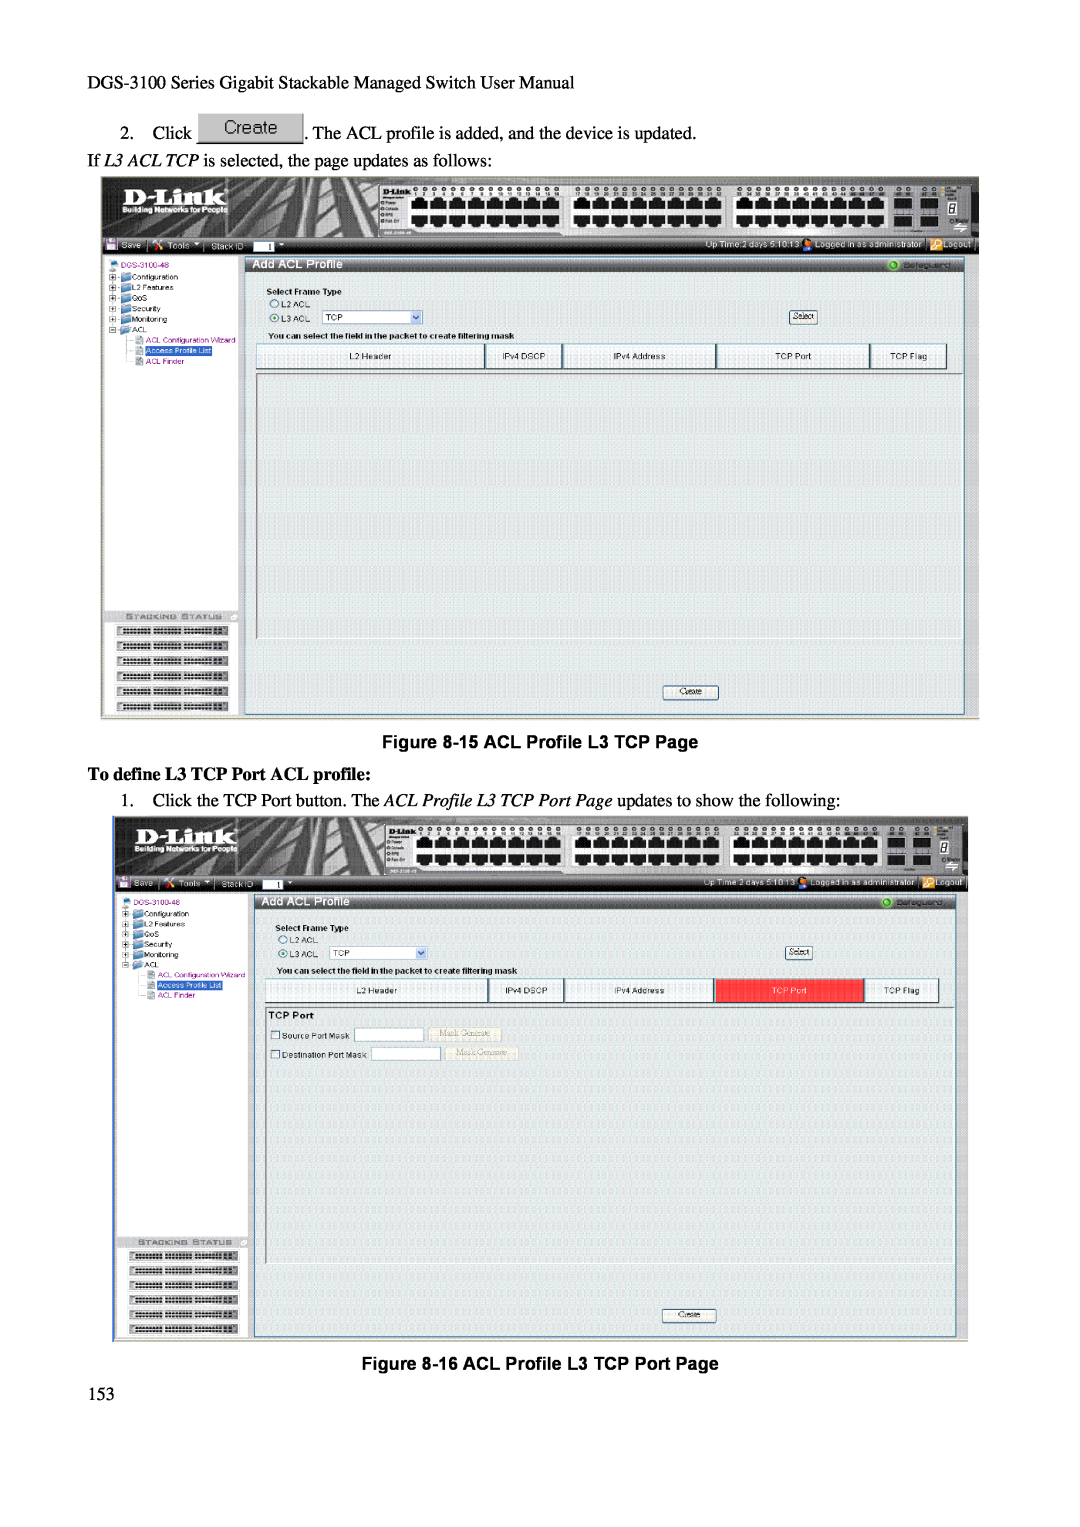 D-Link DGS-3100 user manual 15 ACL Profile L3 TCP Page, To define L3 TCP Port ACL profile, 16 ACL Profile L3 TCP Port Page 